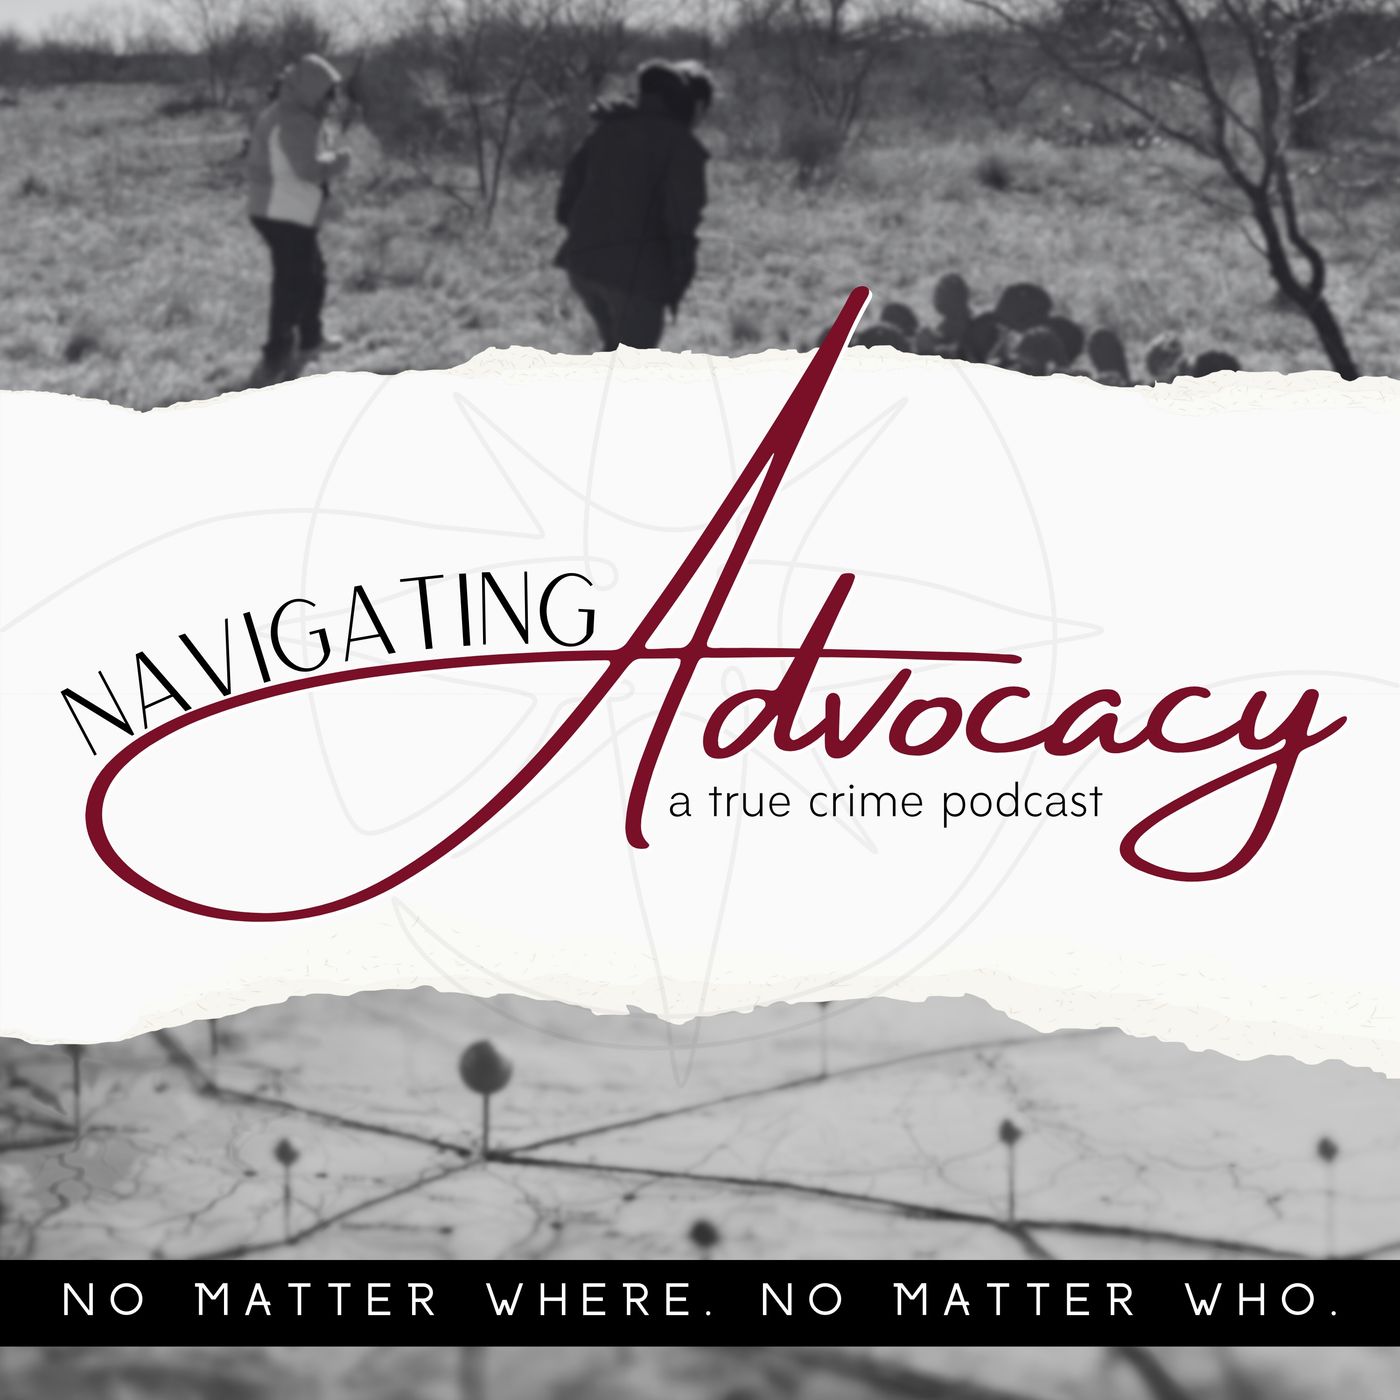 Navigating Advocacy